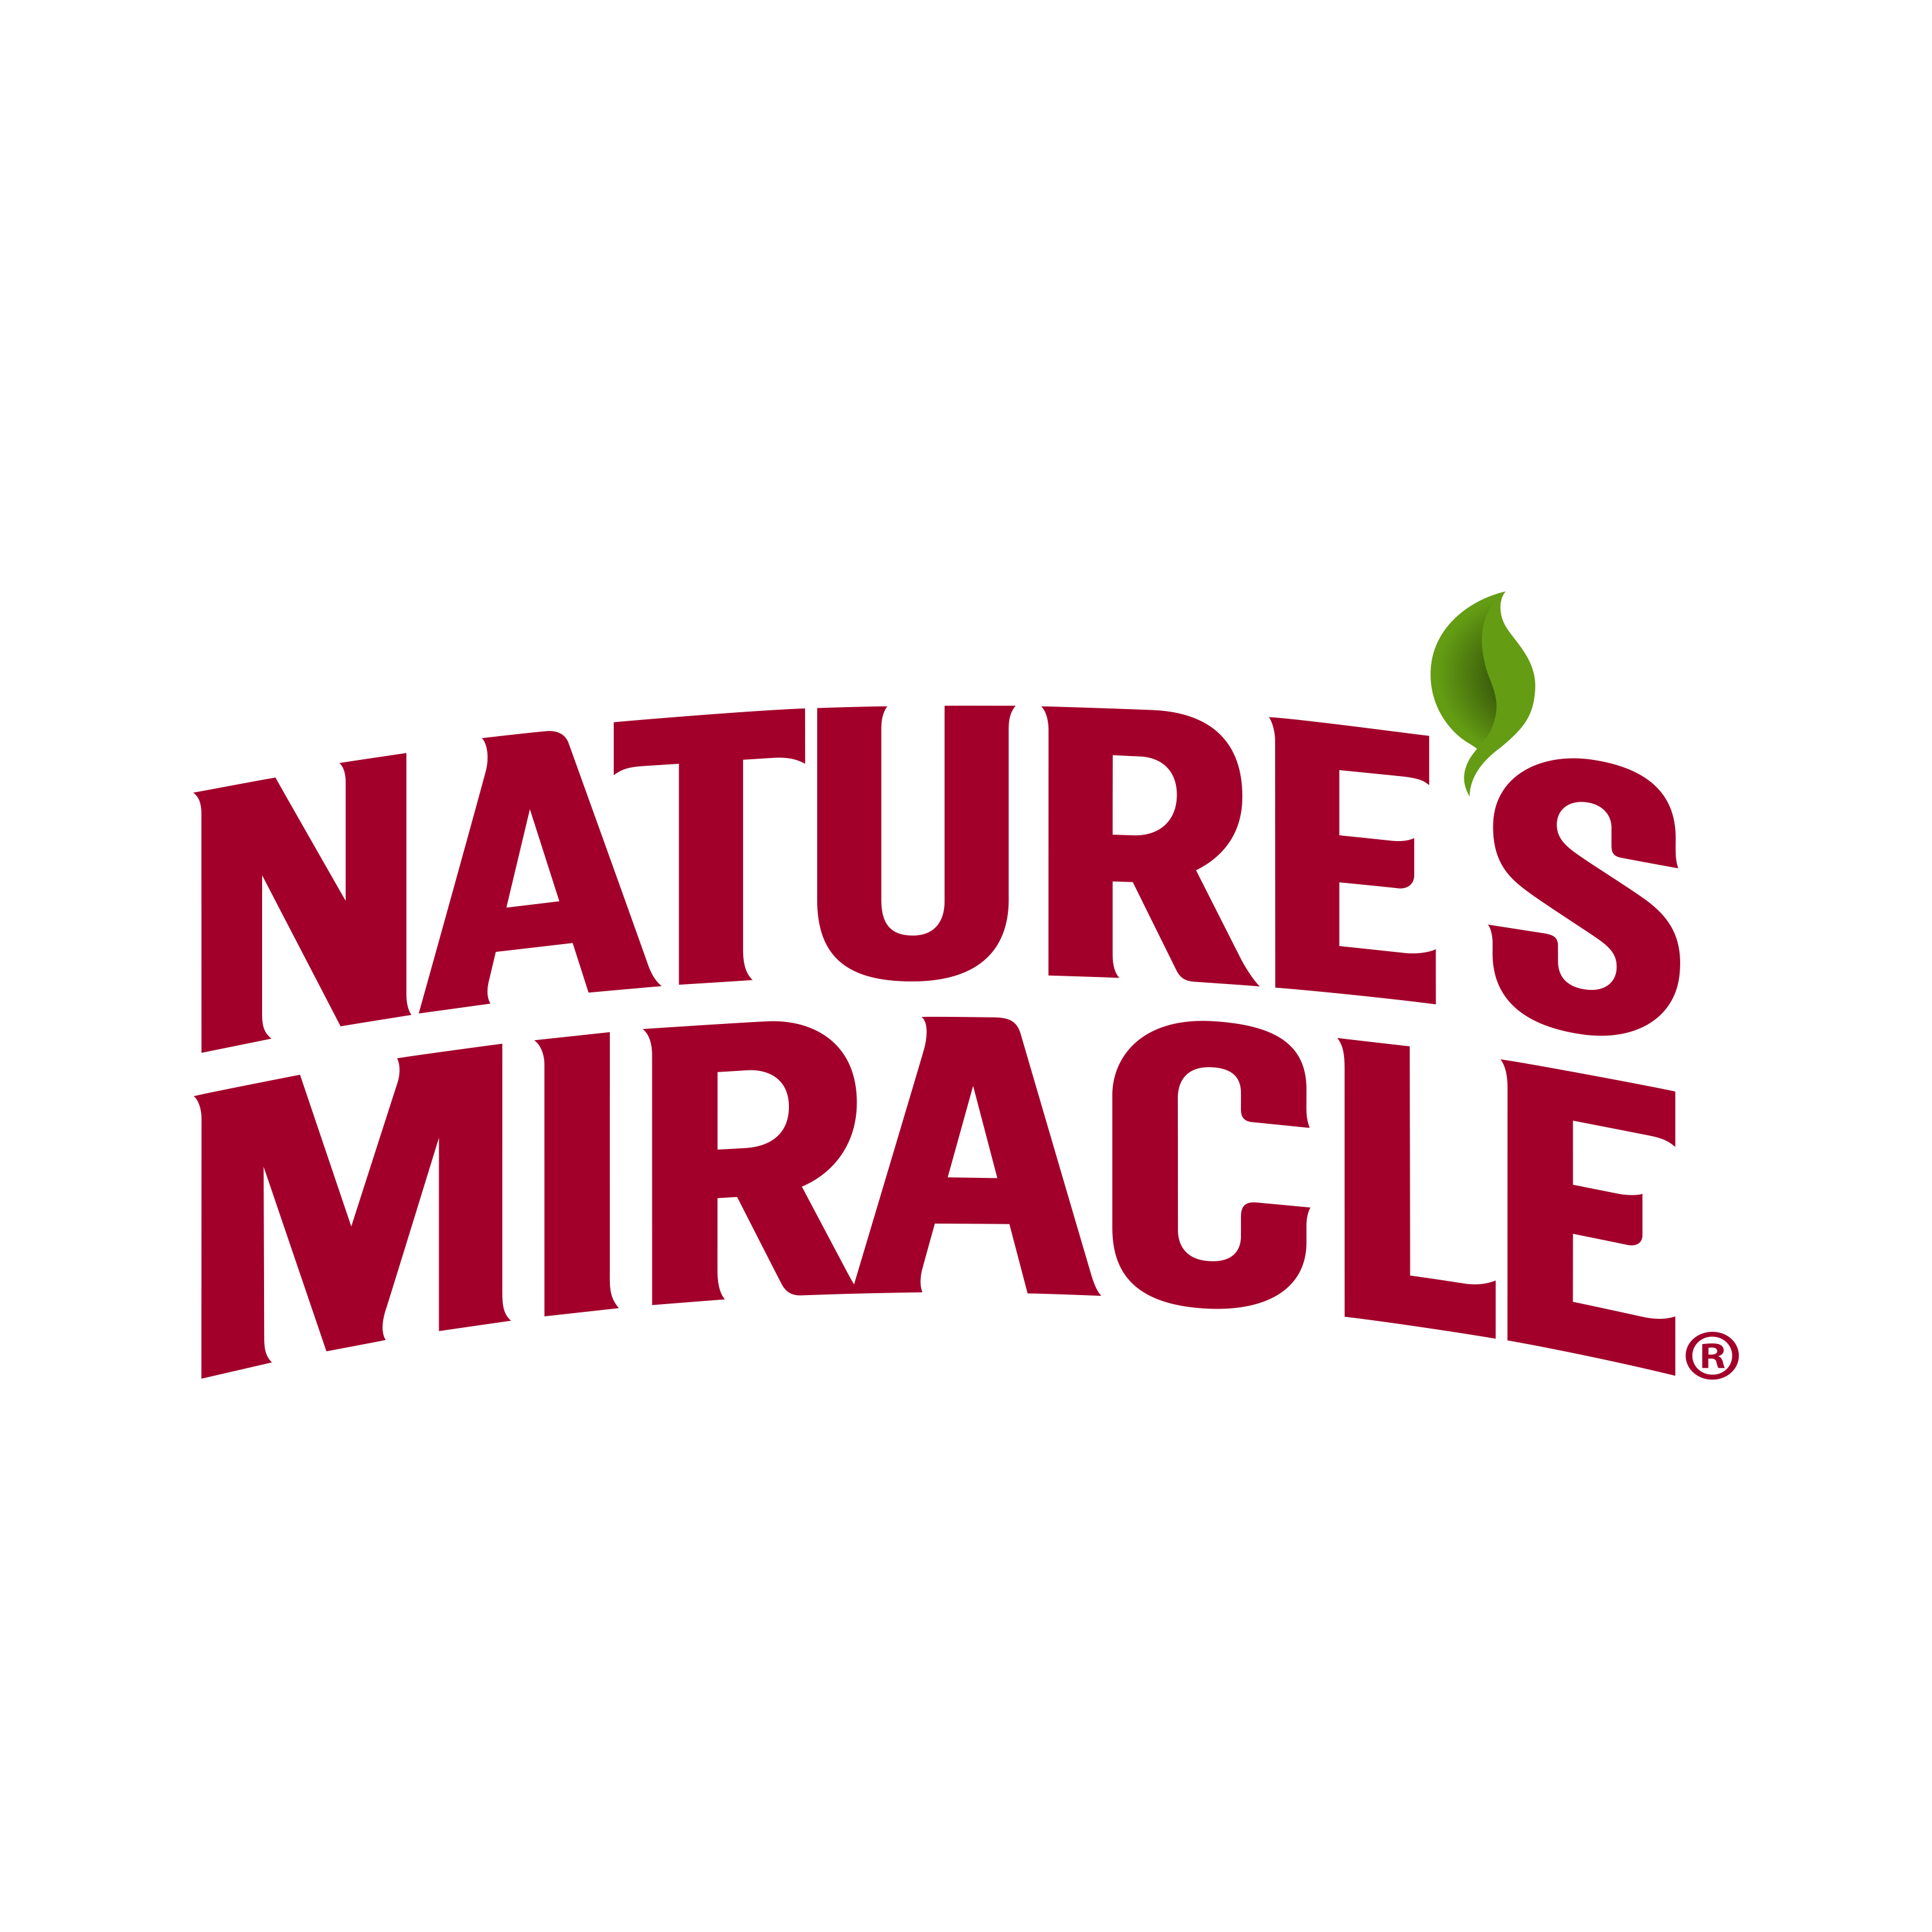 Natures Miracle Logo